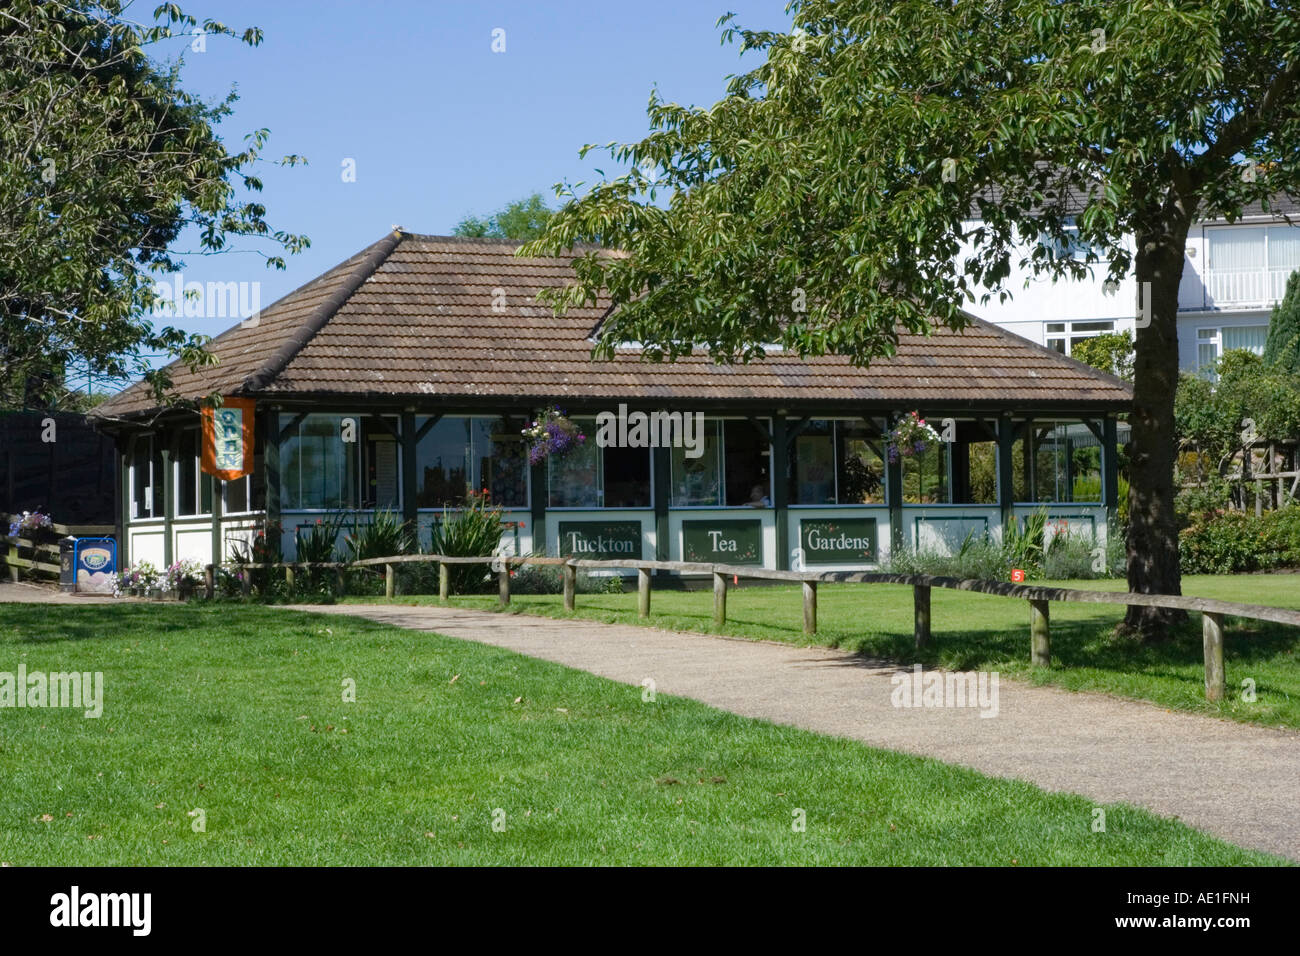 Tuckton Tea Gardens, near River Stour, Christchurch, Dorset, UK Stock Photo